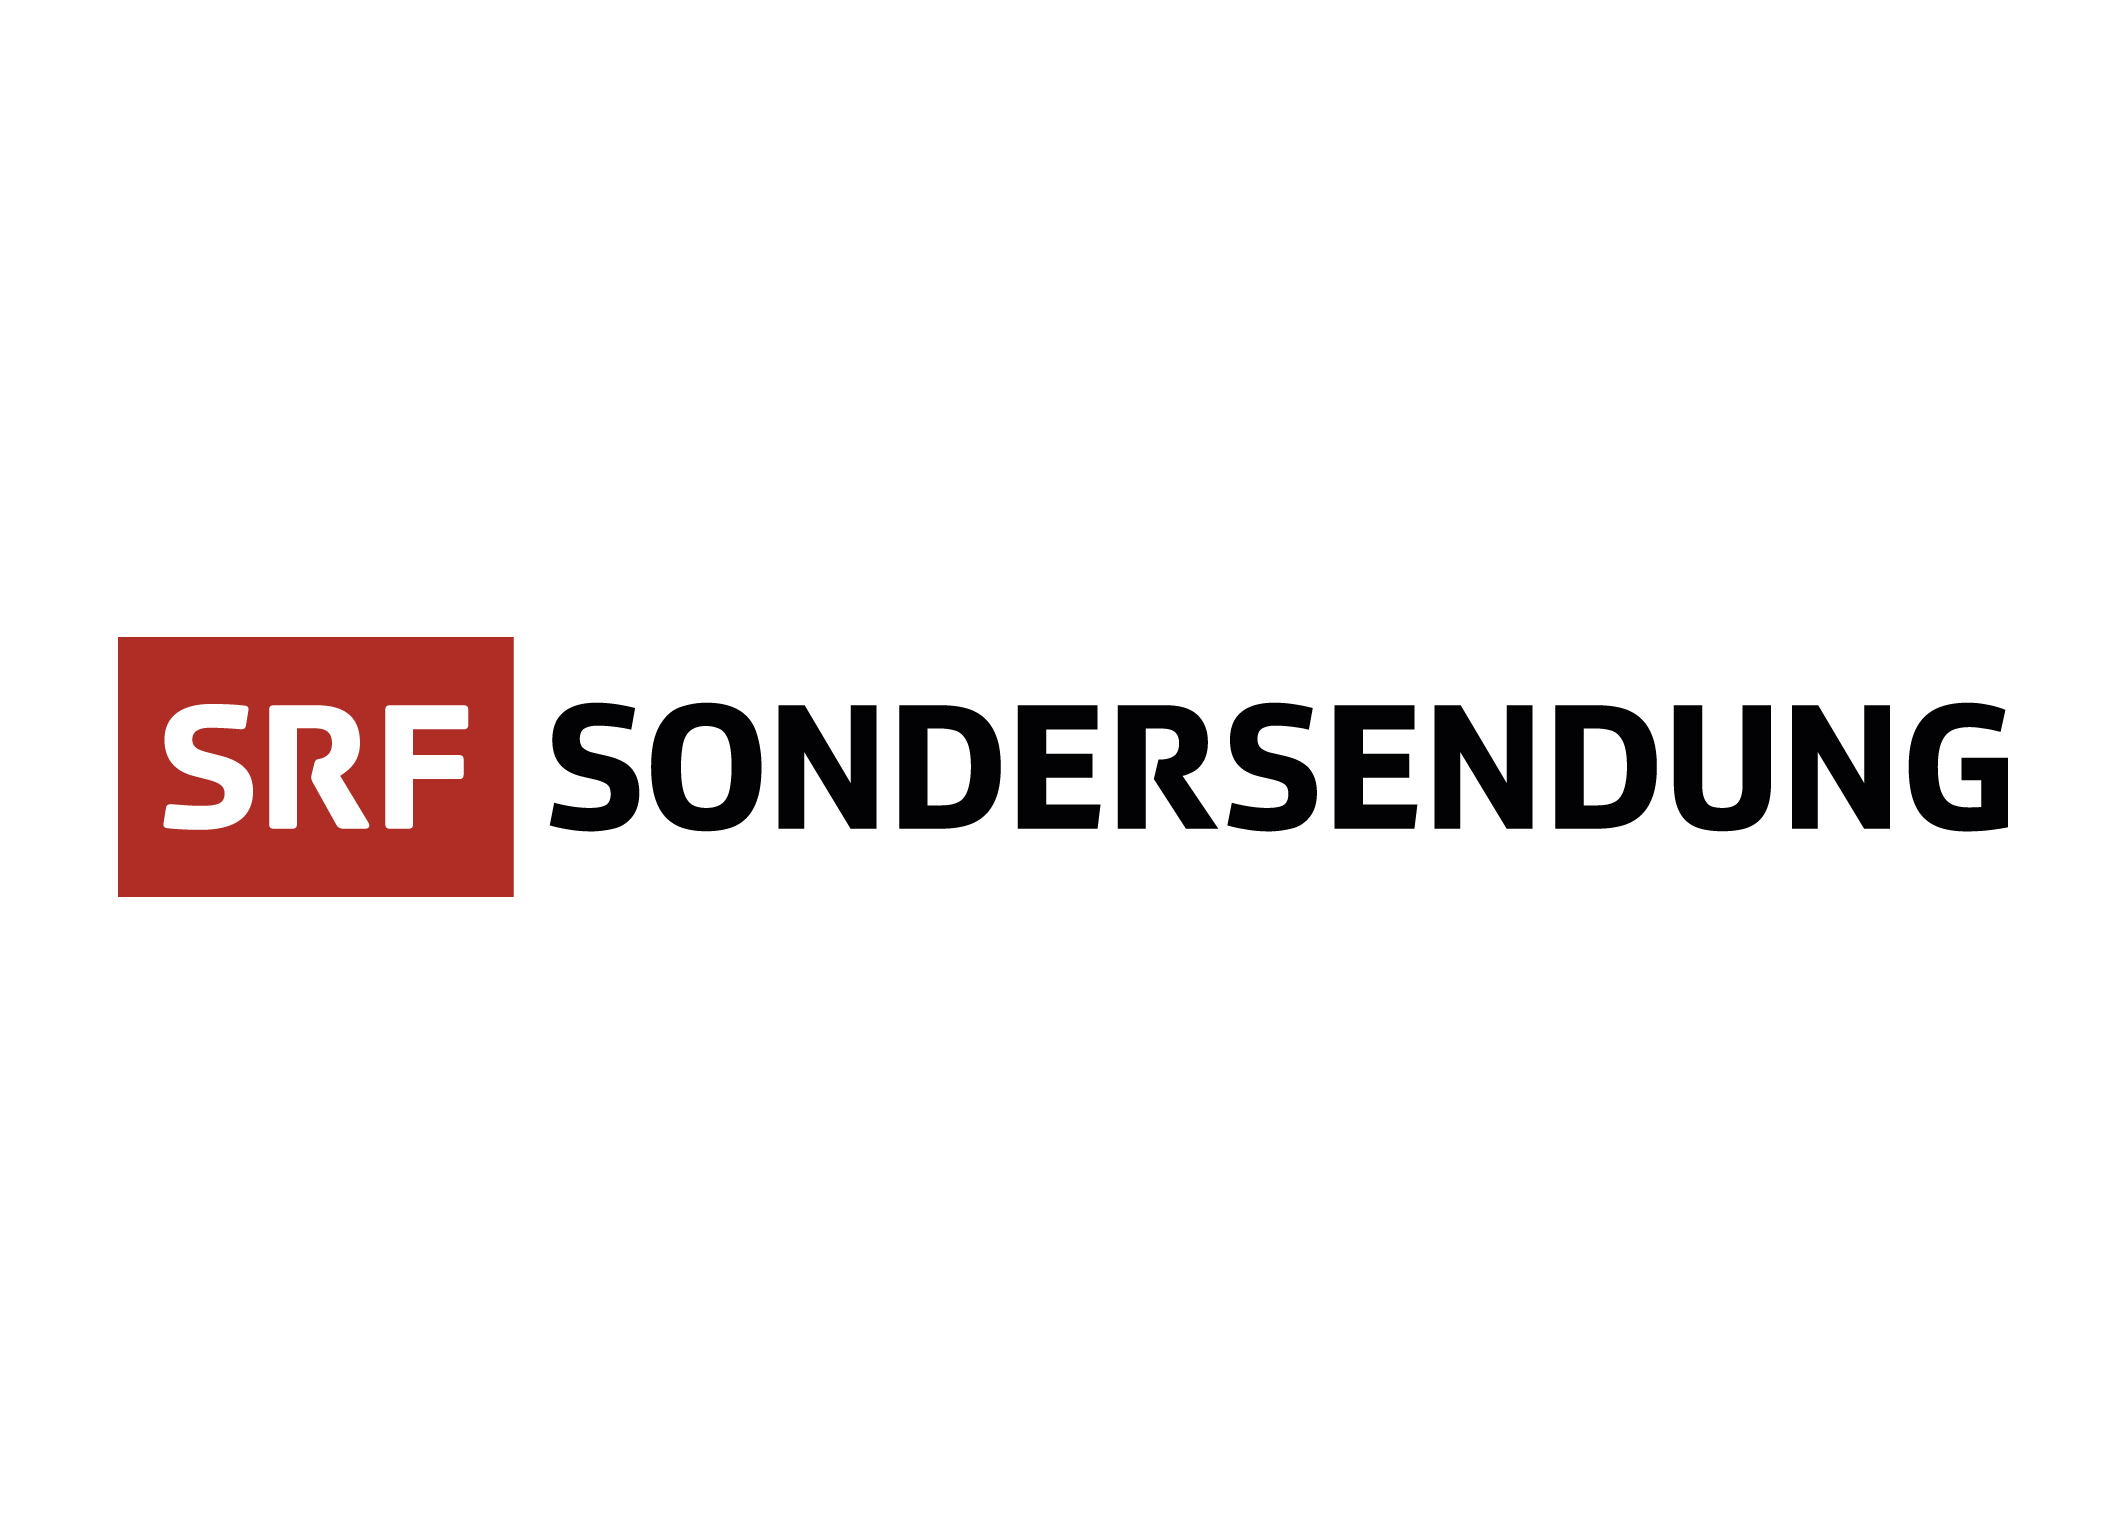 SRF Sondersendung Logo